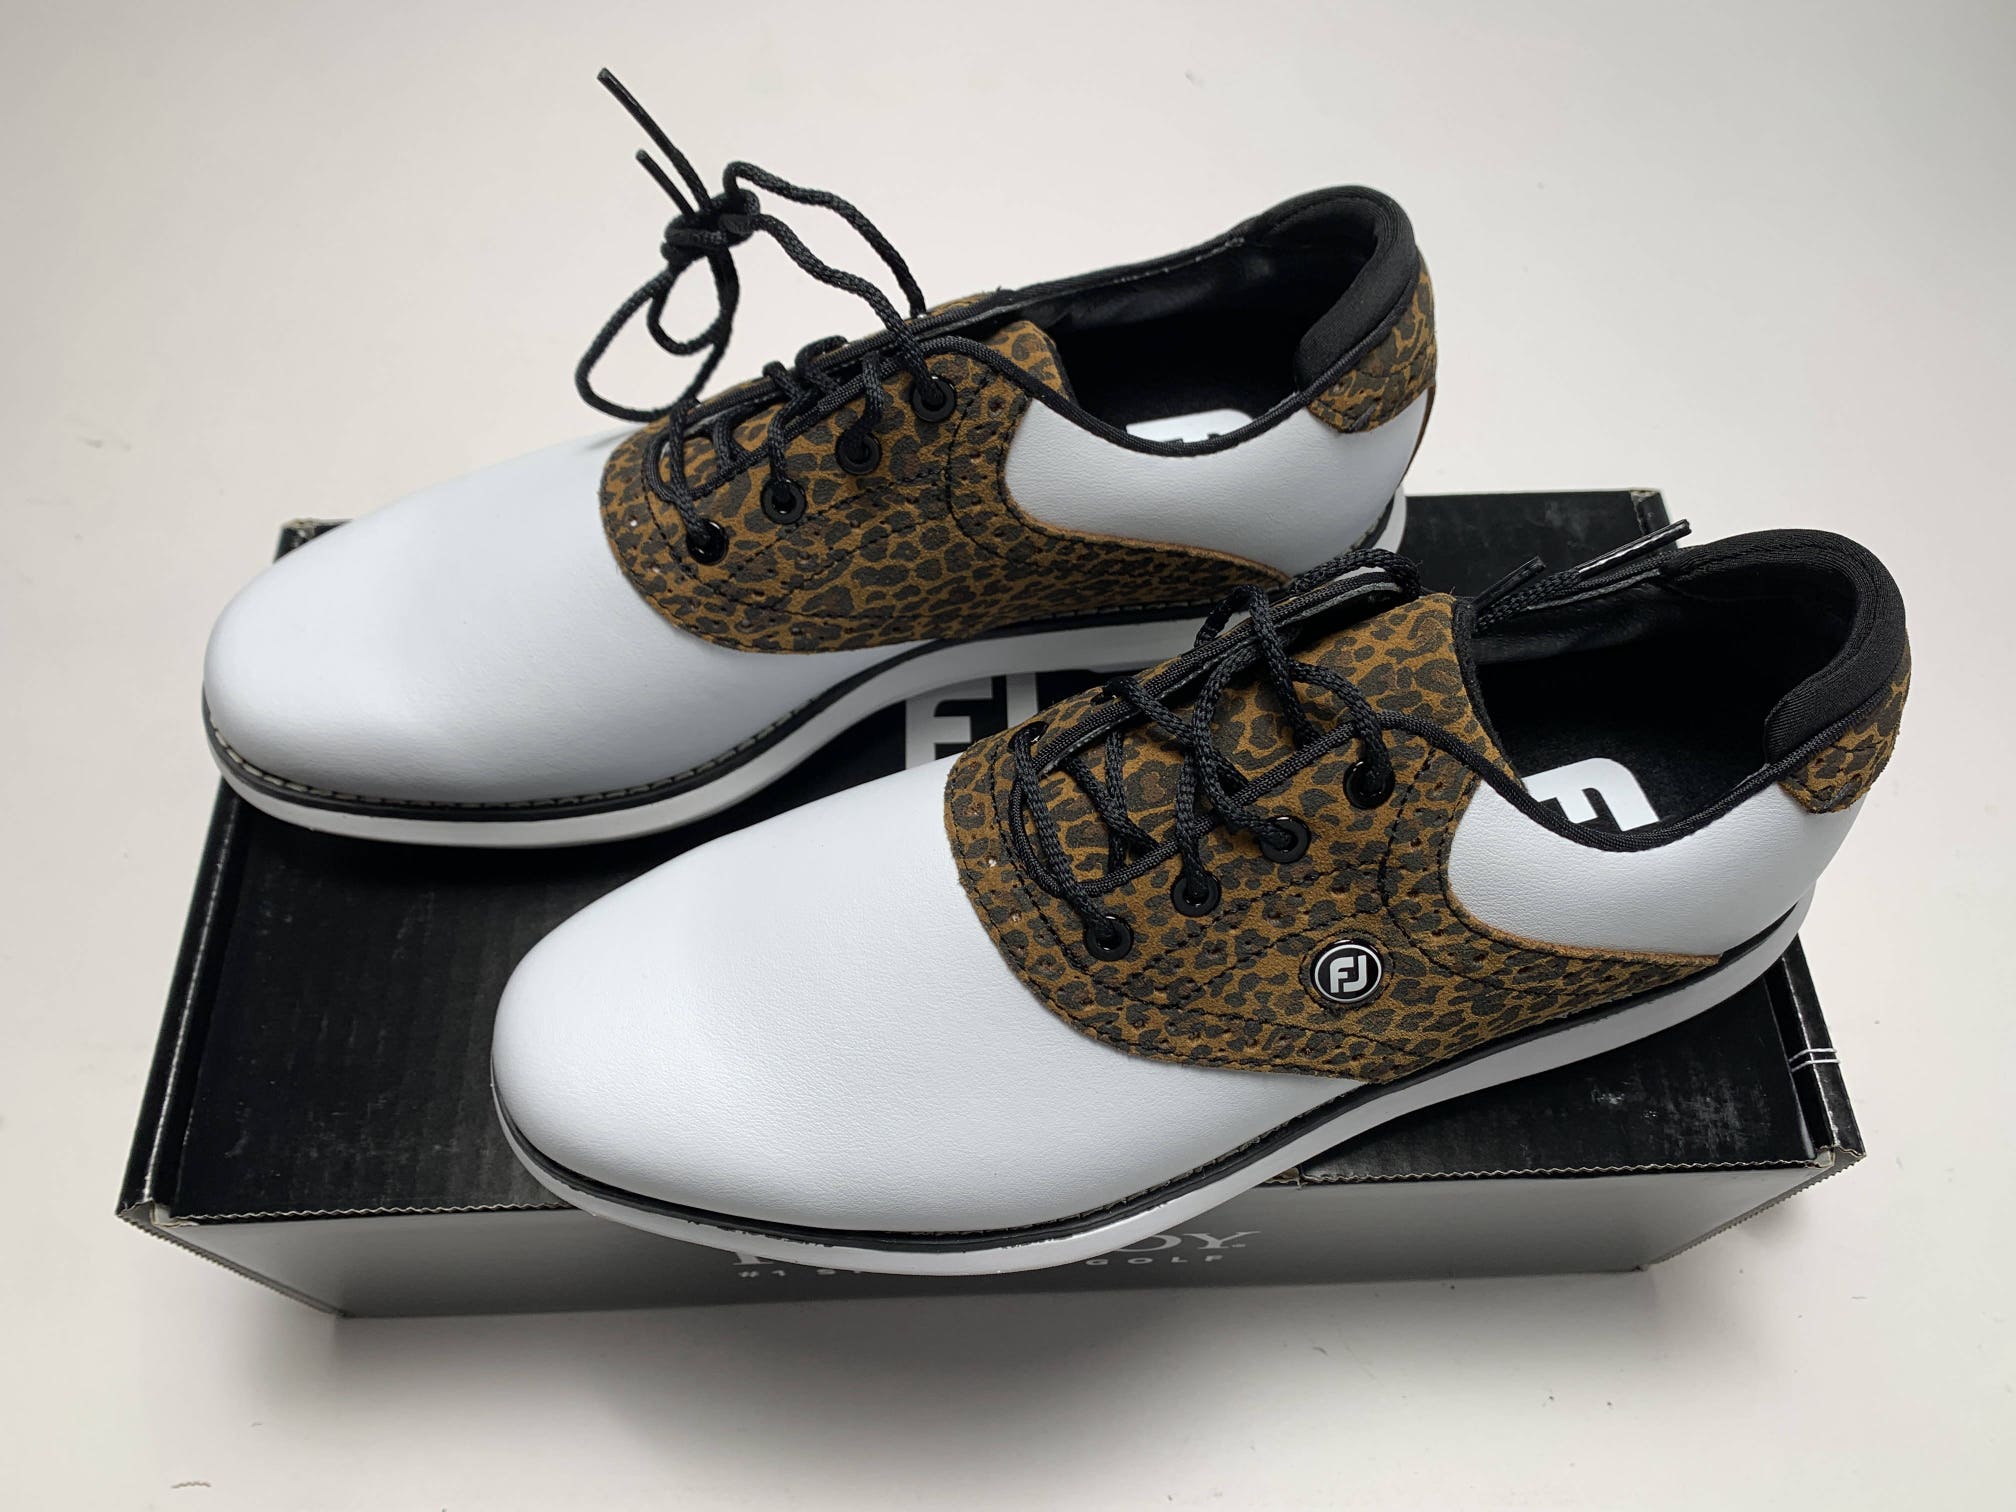 FootJoy FJ Traditions Golf Shoes White Brown Leopard Women's SZ 8 (97923)